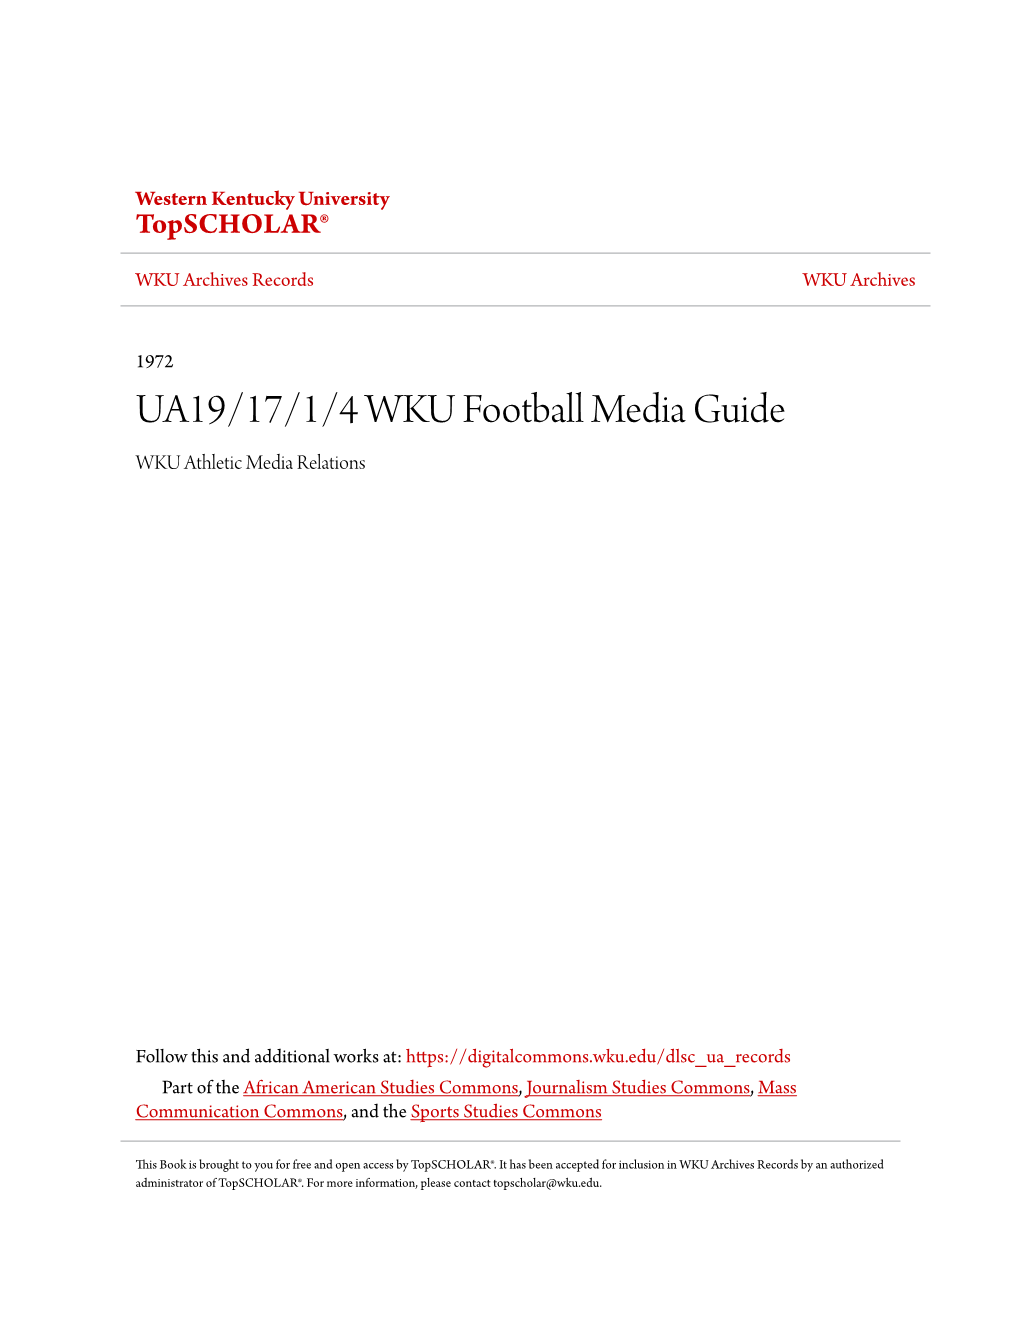 UA19/17/1/4 WKU Football Media Guide WKU Athletic Media Relations